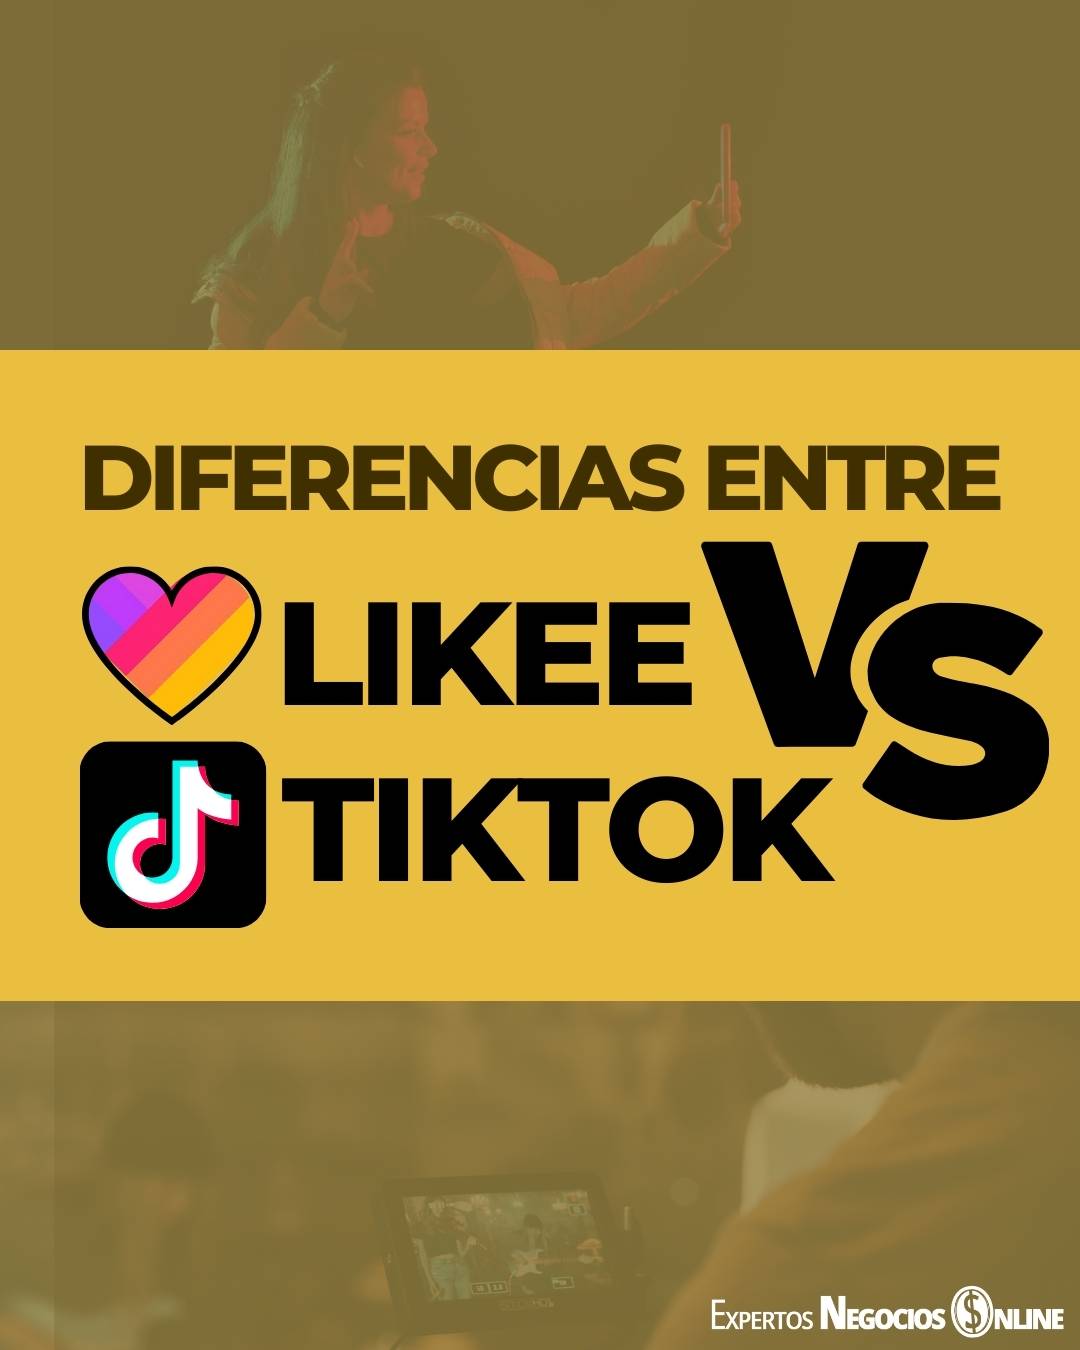 Diferencias entre Likee vs Tiktok